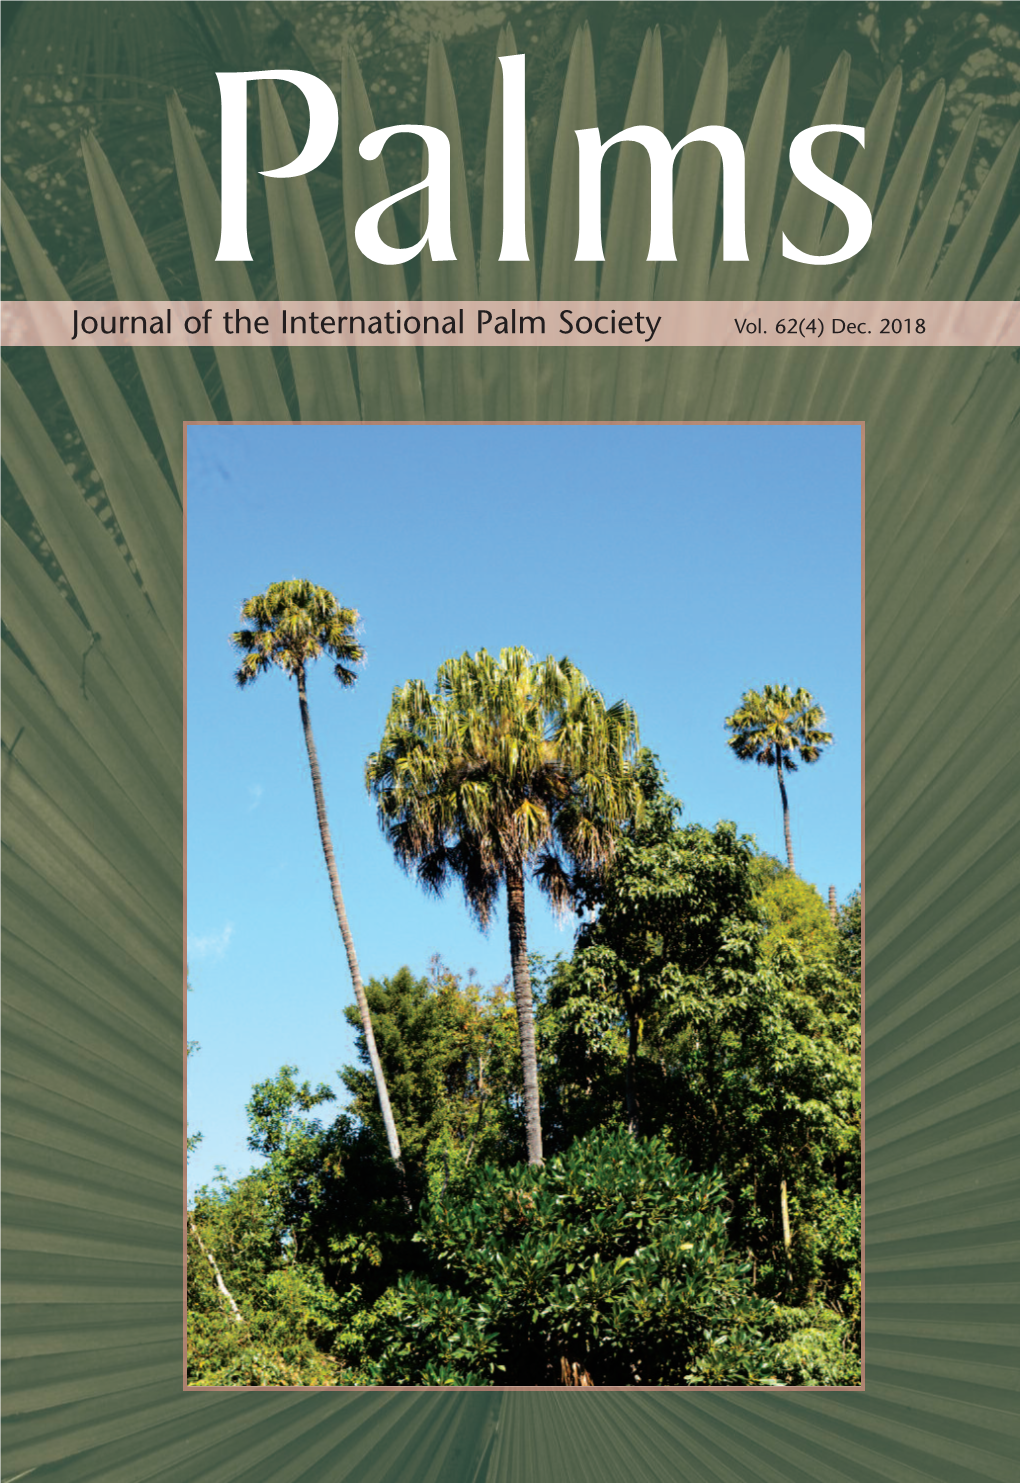 Journal of the International Palm Society Vol. 62(4) Dec. 2018 the INTERNATIONAL PALM SOCIETY, INC